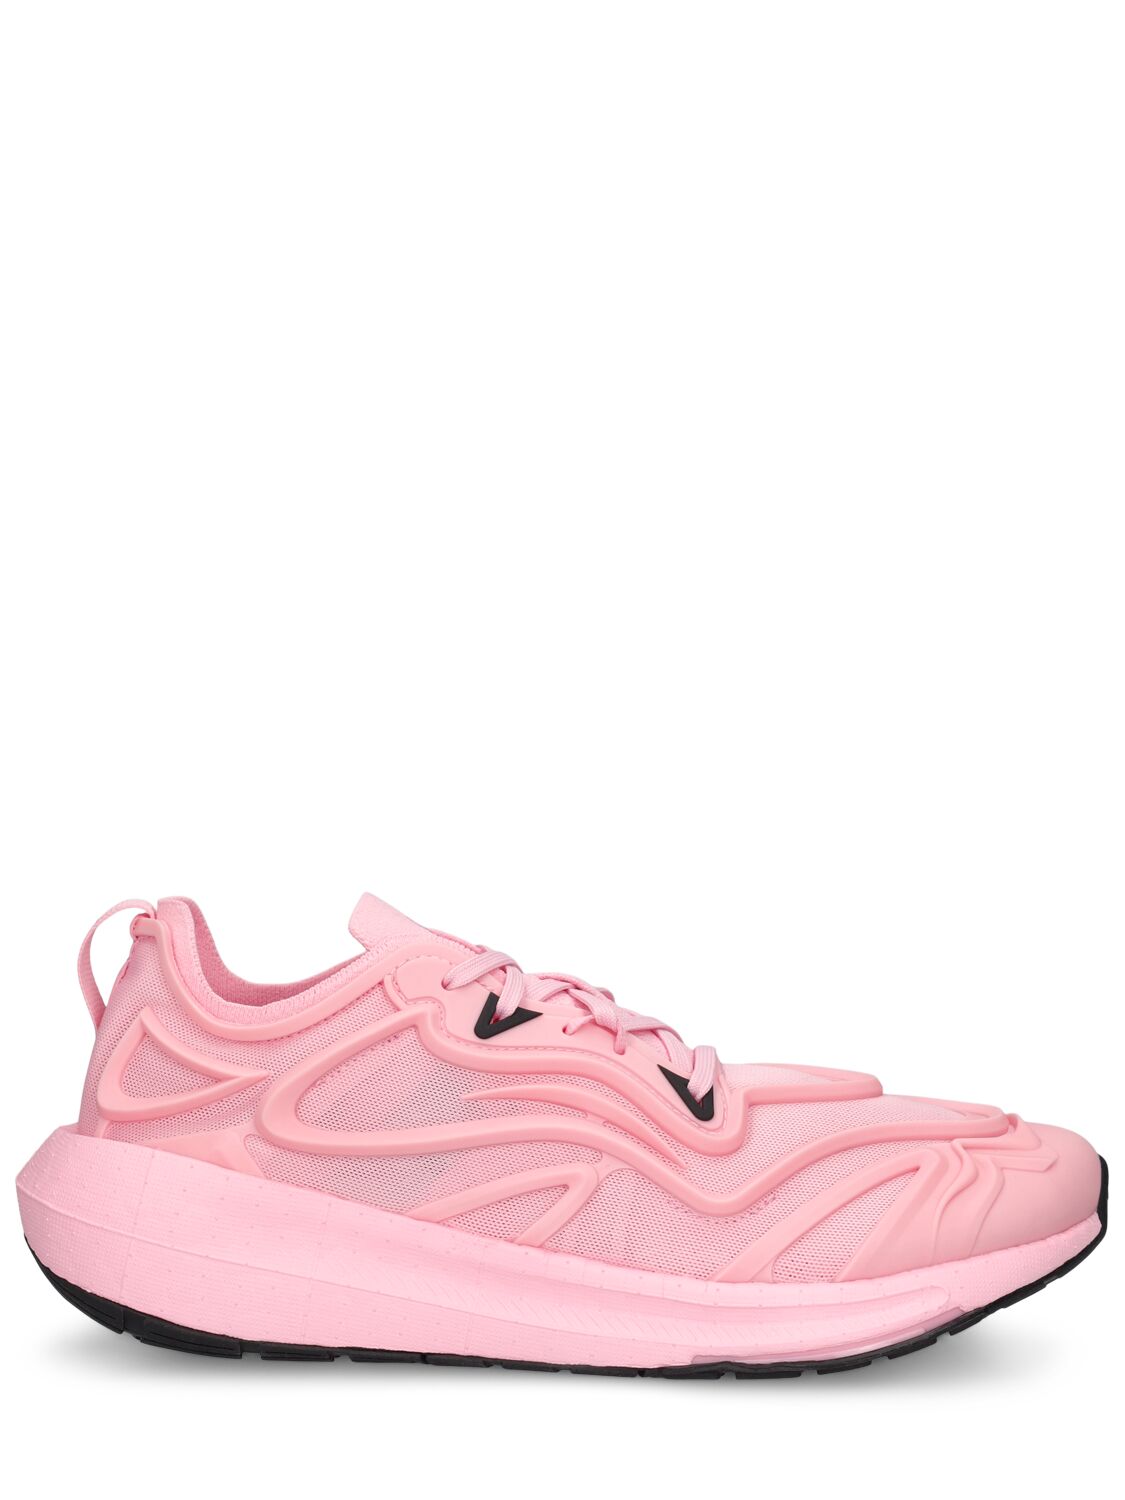 Adidas By Stella Mccartney Asmc Ultraboost Speed Trainers In Pink